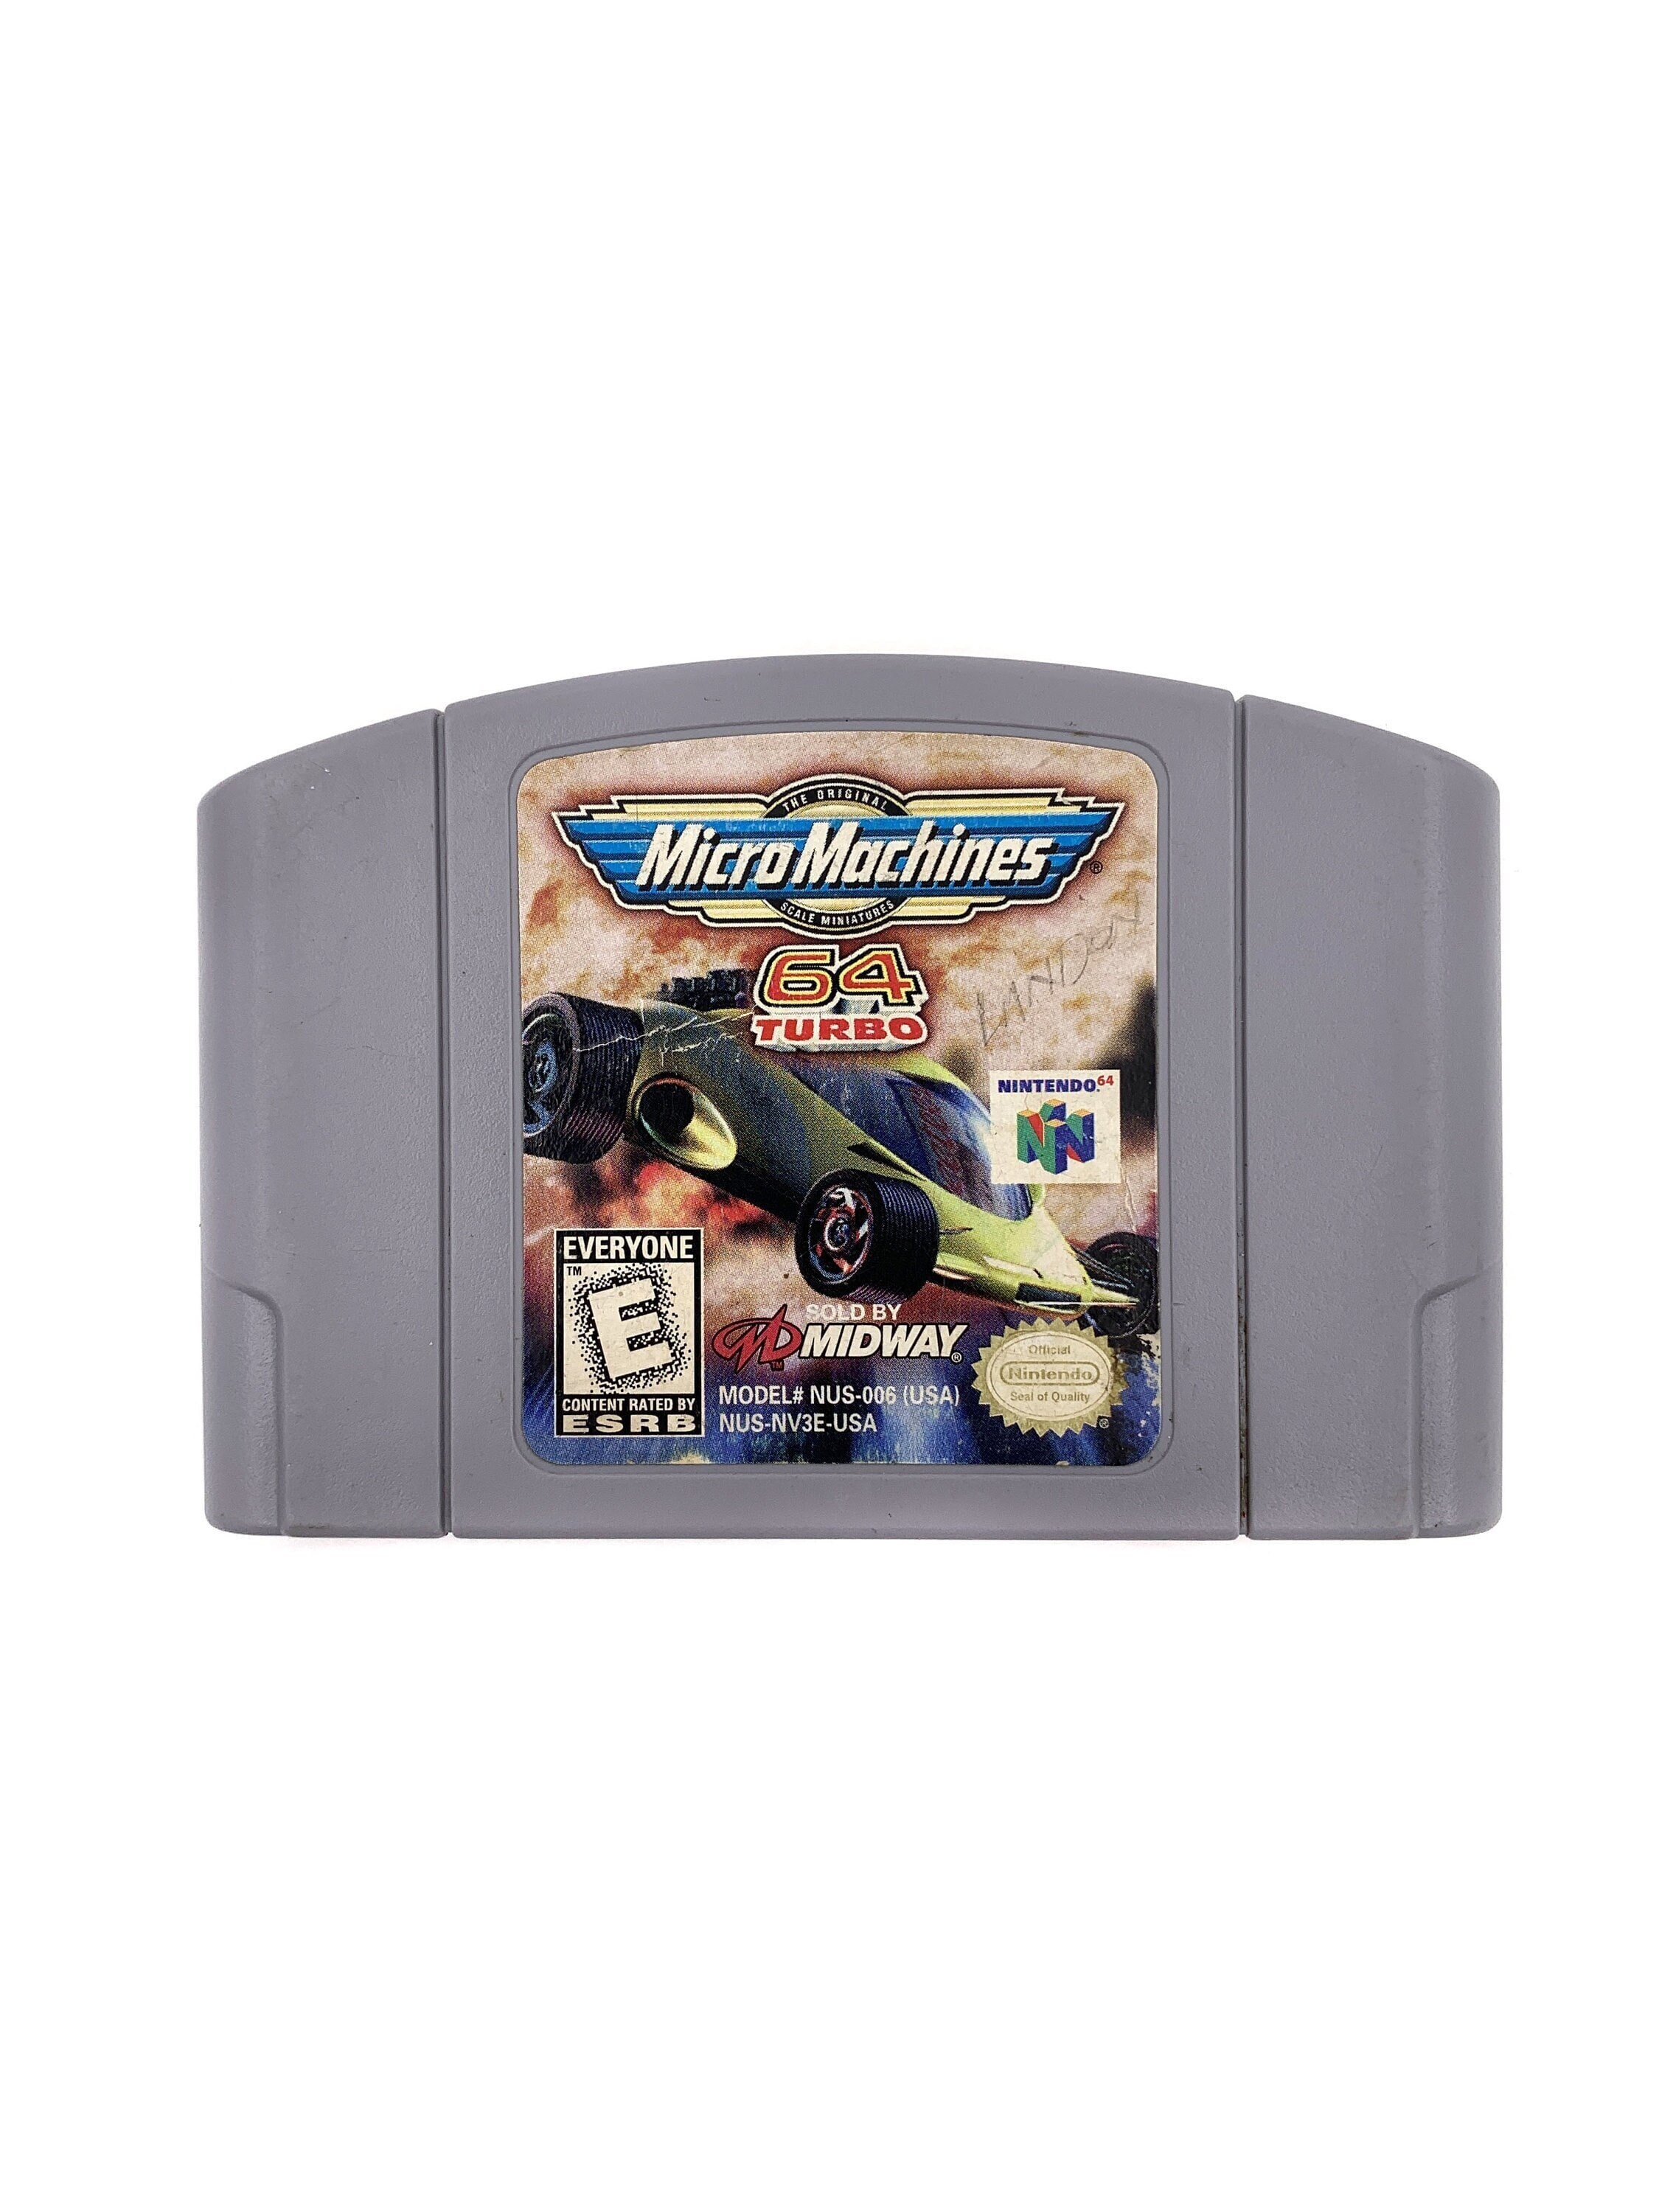 Micro Machines 64 Turbo Nintendo 64 Game -